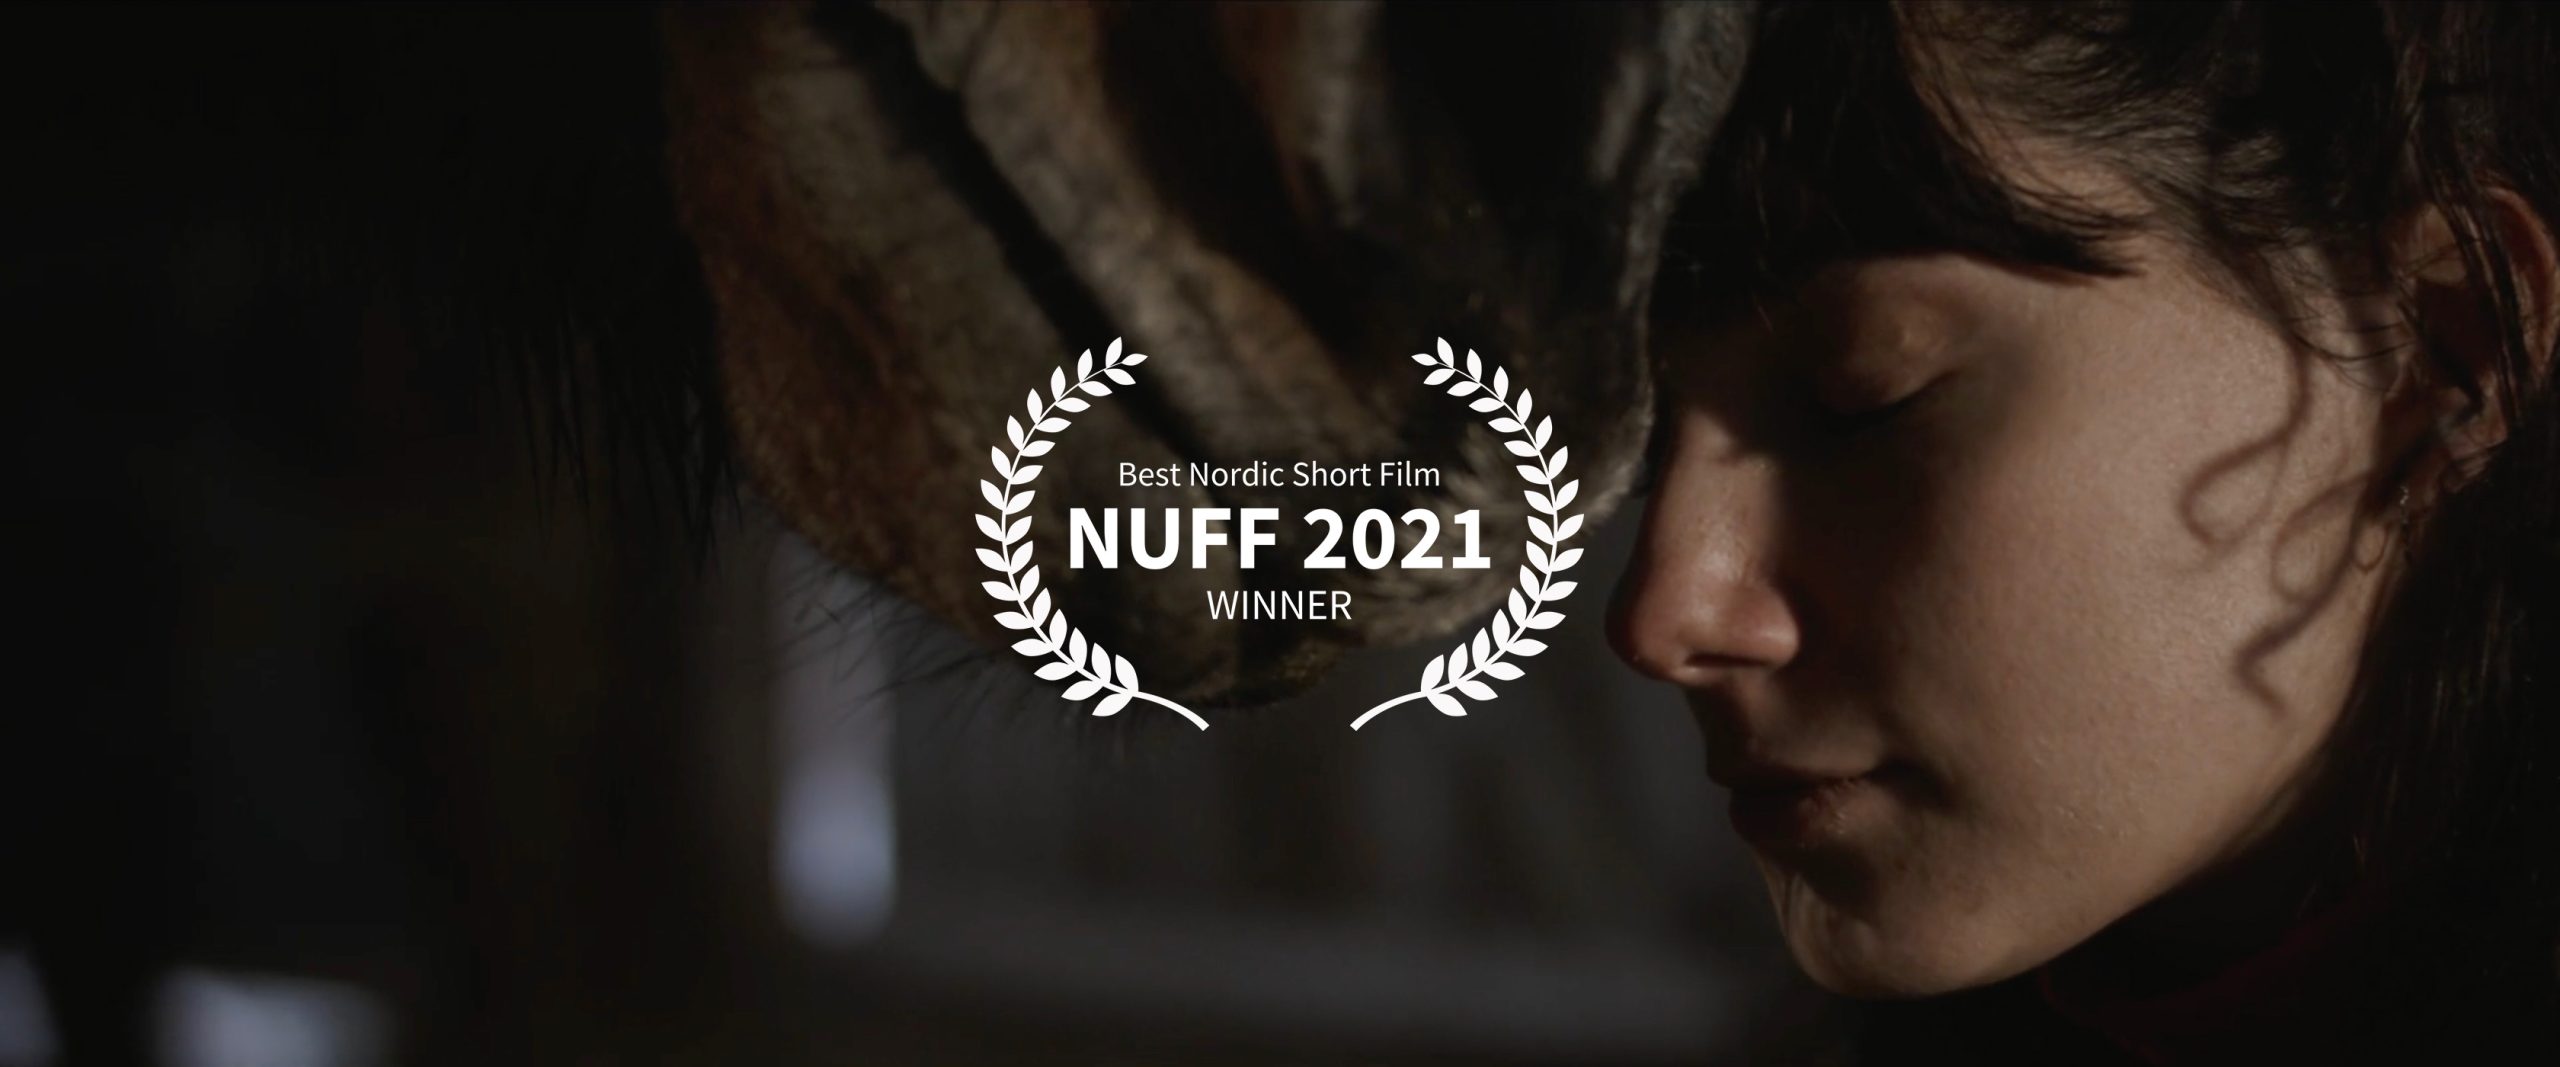 nattljus it blooms at night award best nordic short film nuff 2021 pris film kortfilm